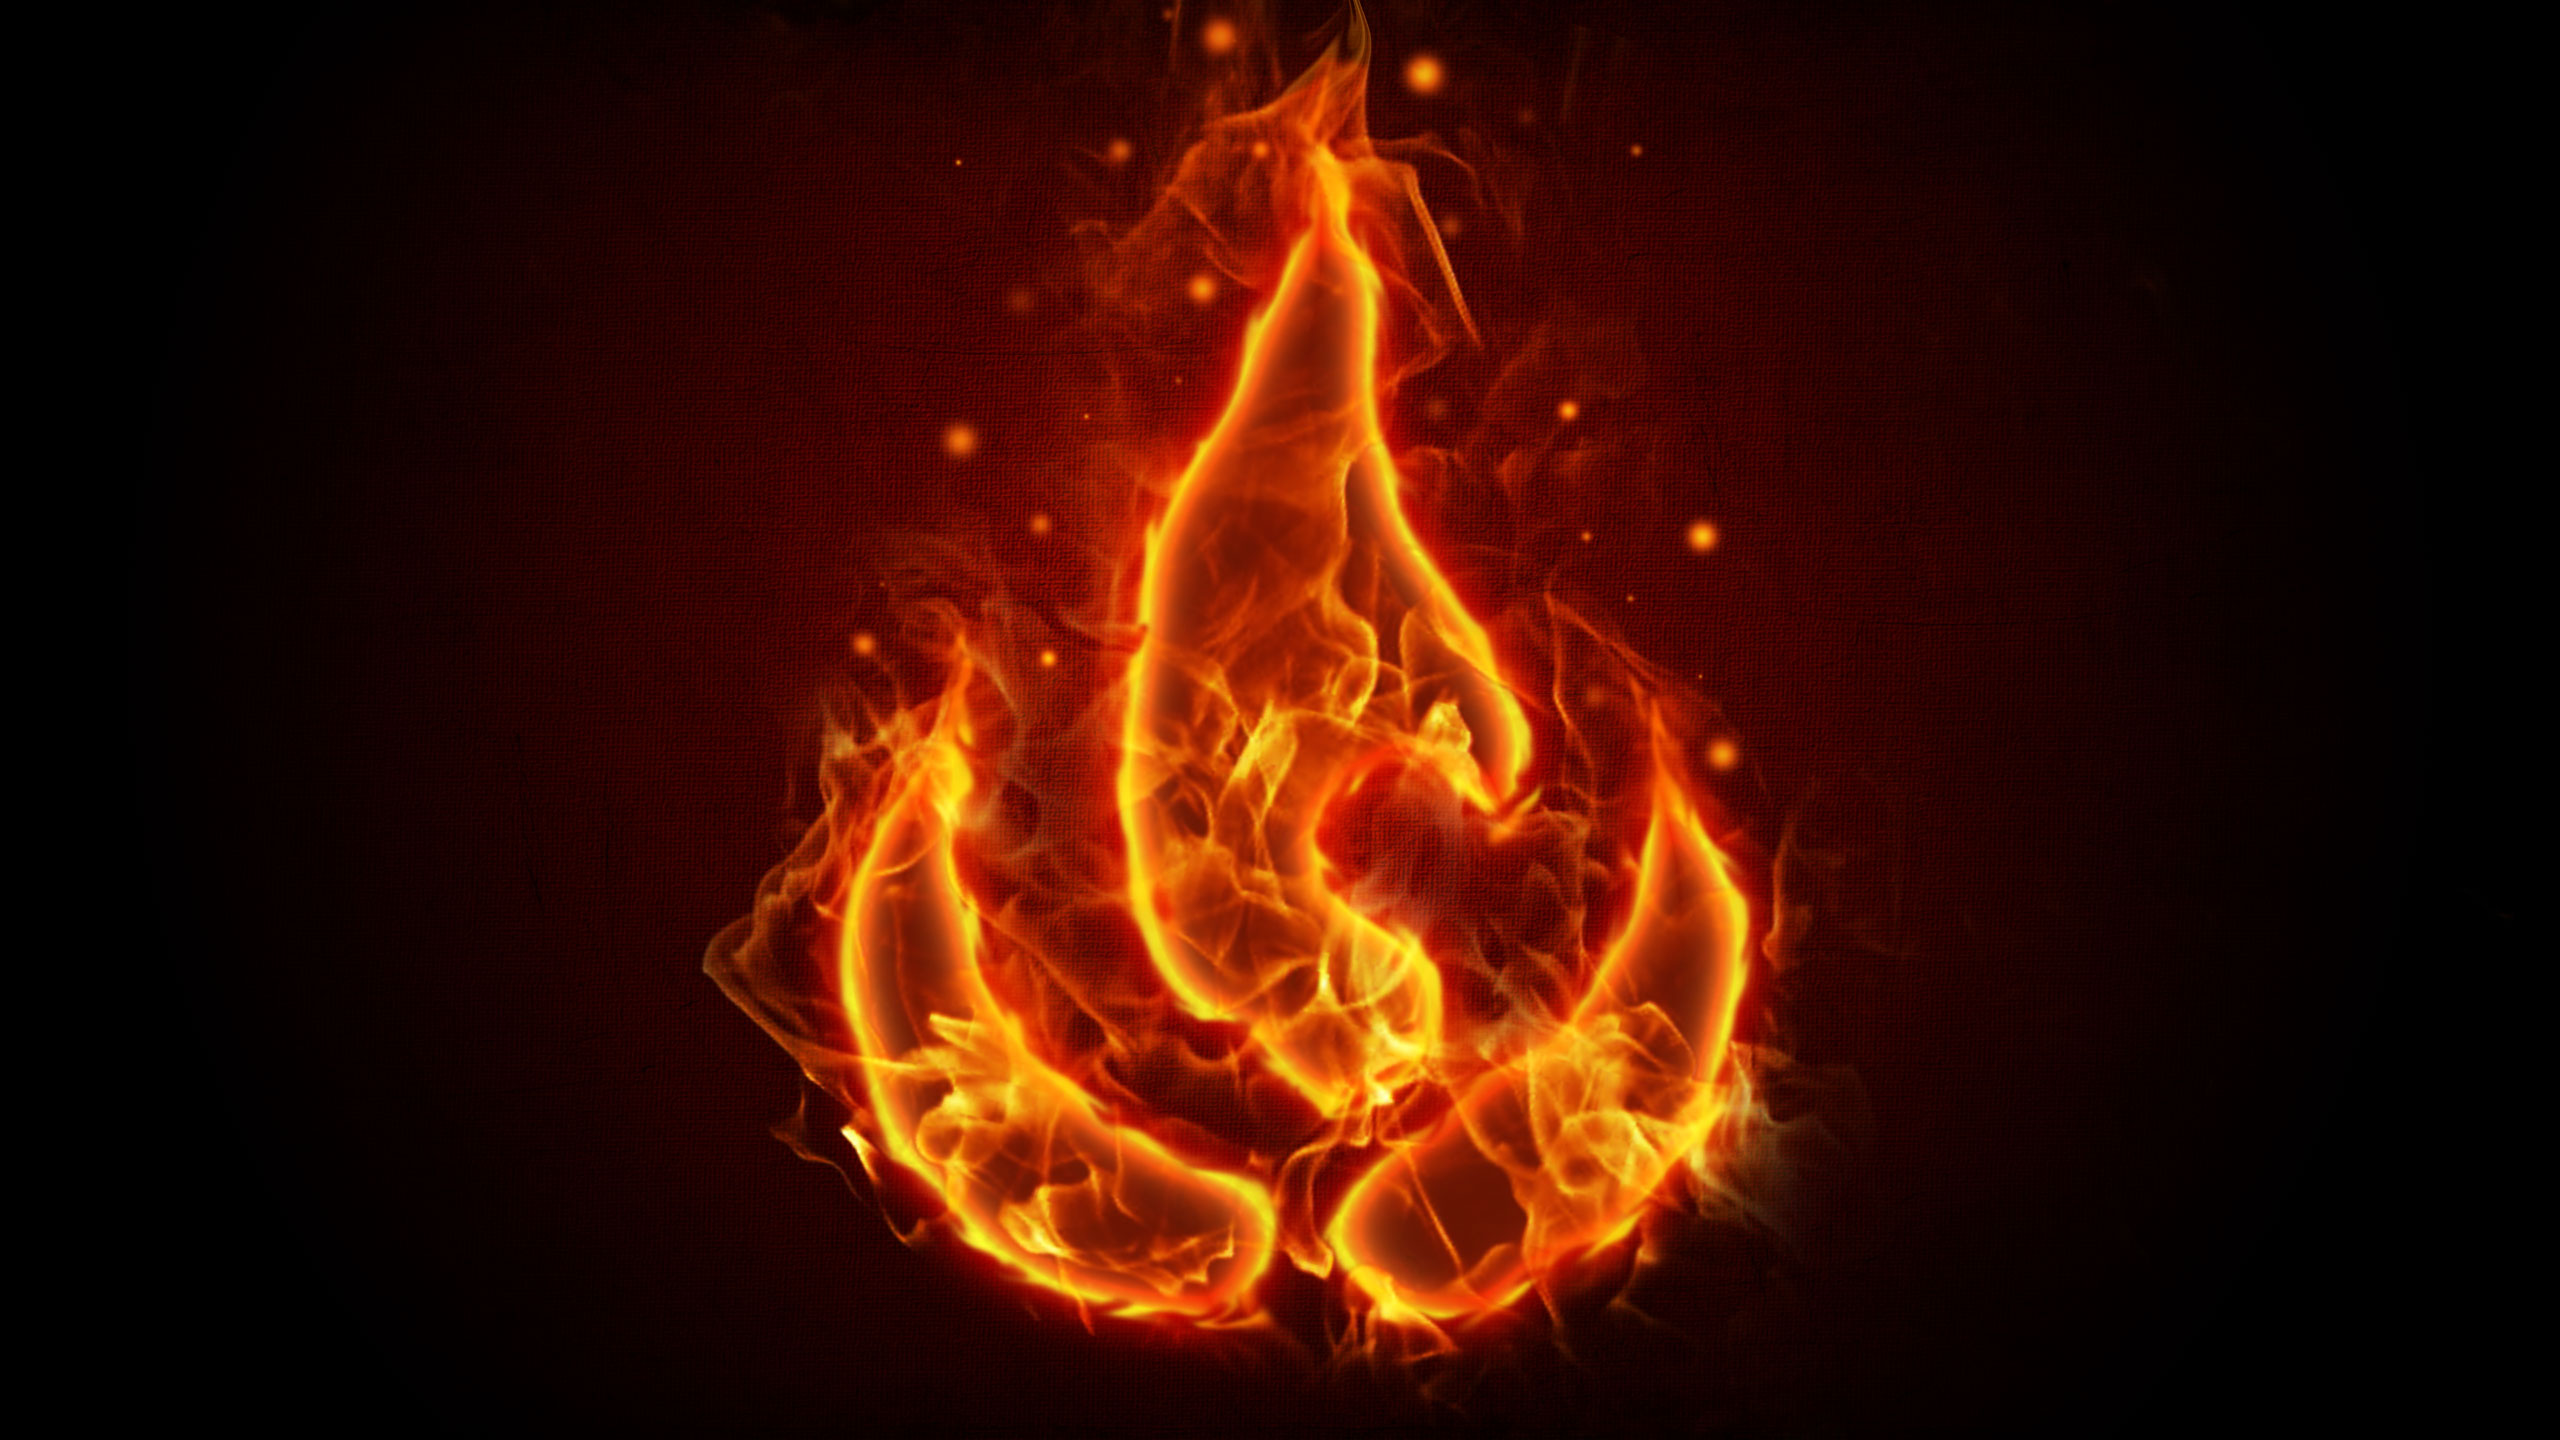 Fire Flame Wallpaper 2560x1440 Fire Flame 2560x1440